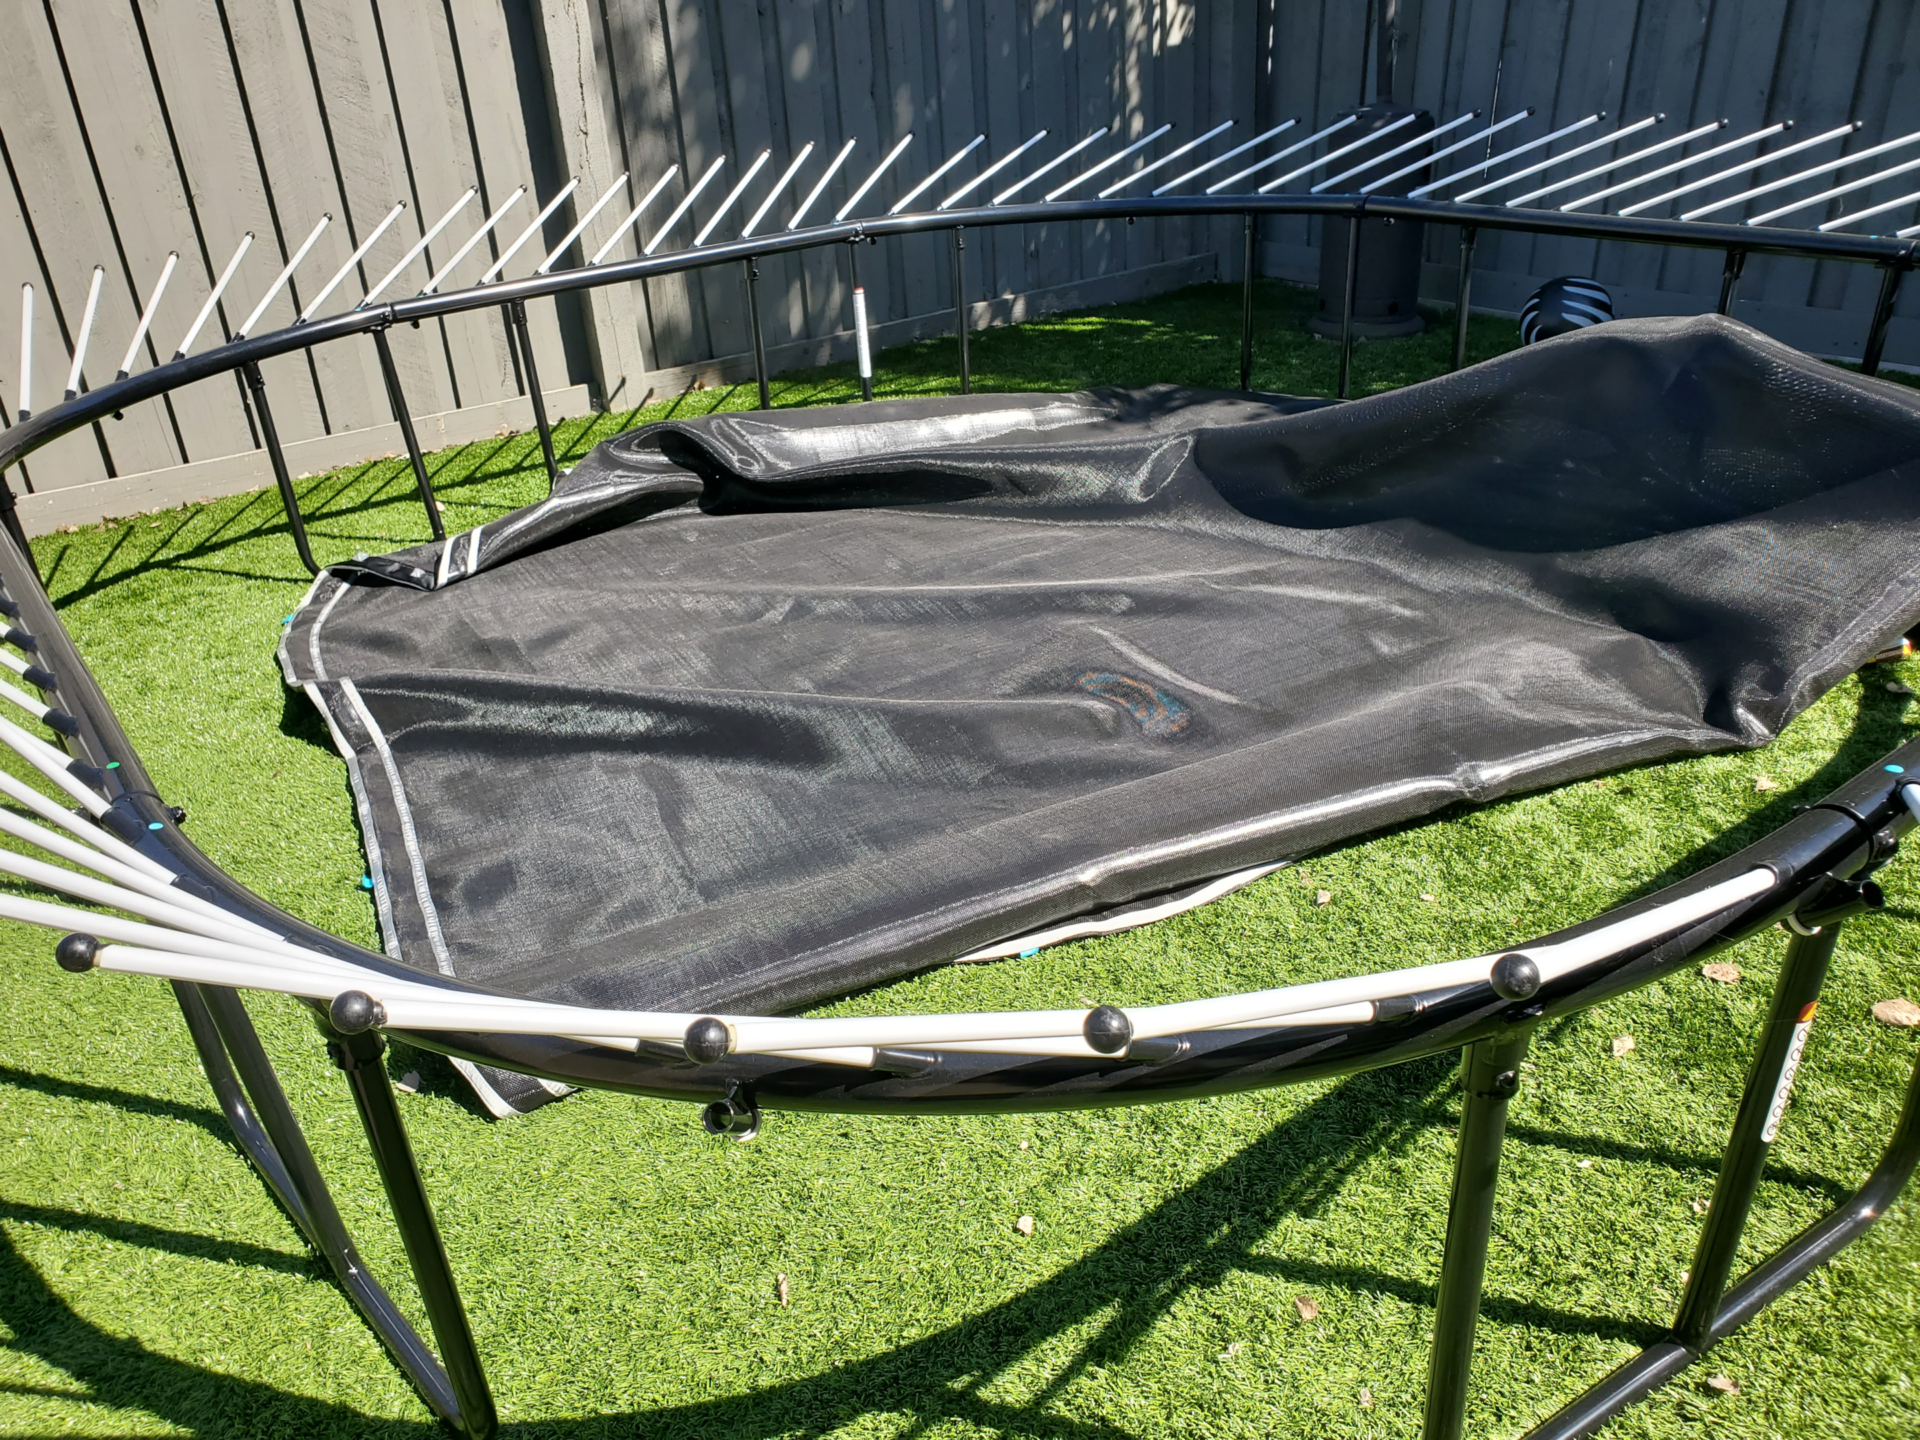 Maintenance of a trampoline for longevity